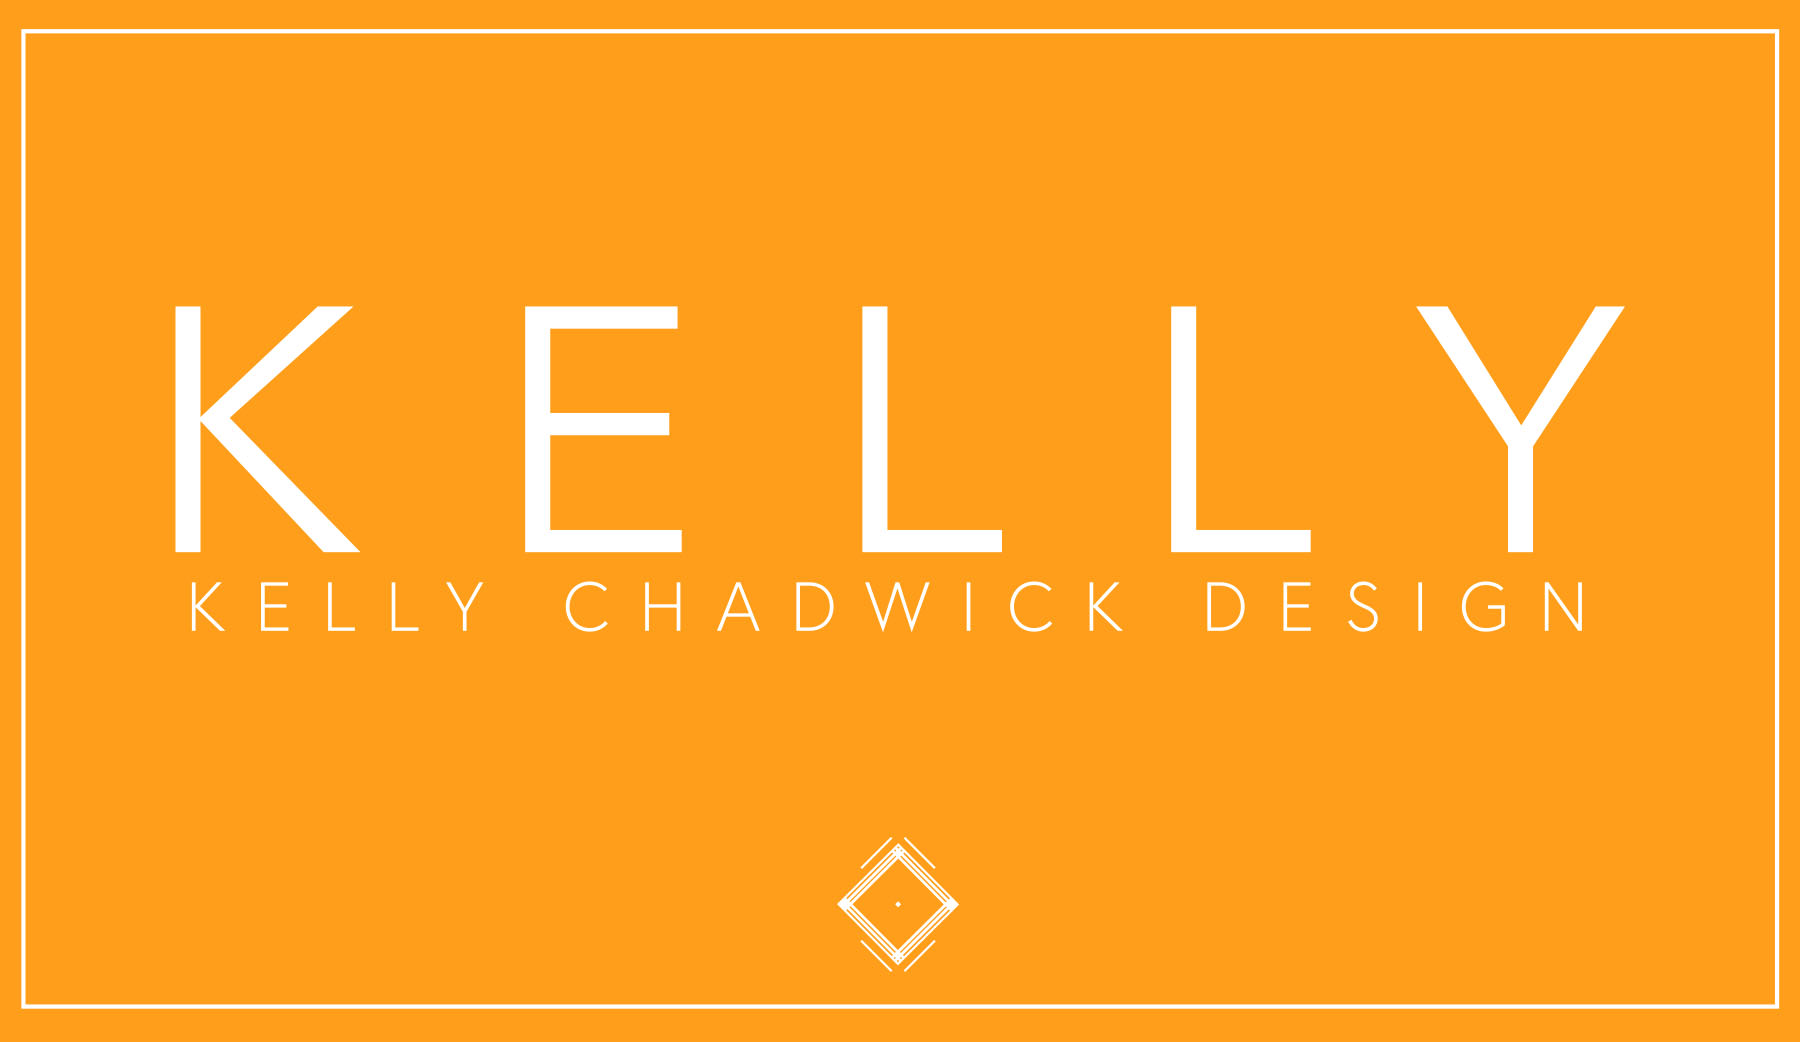 Kelly Chadwick Design